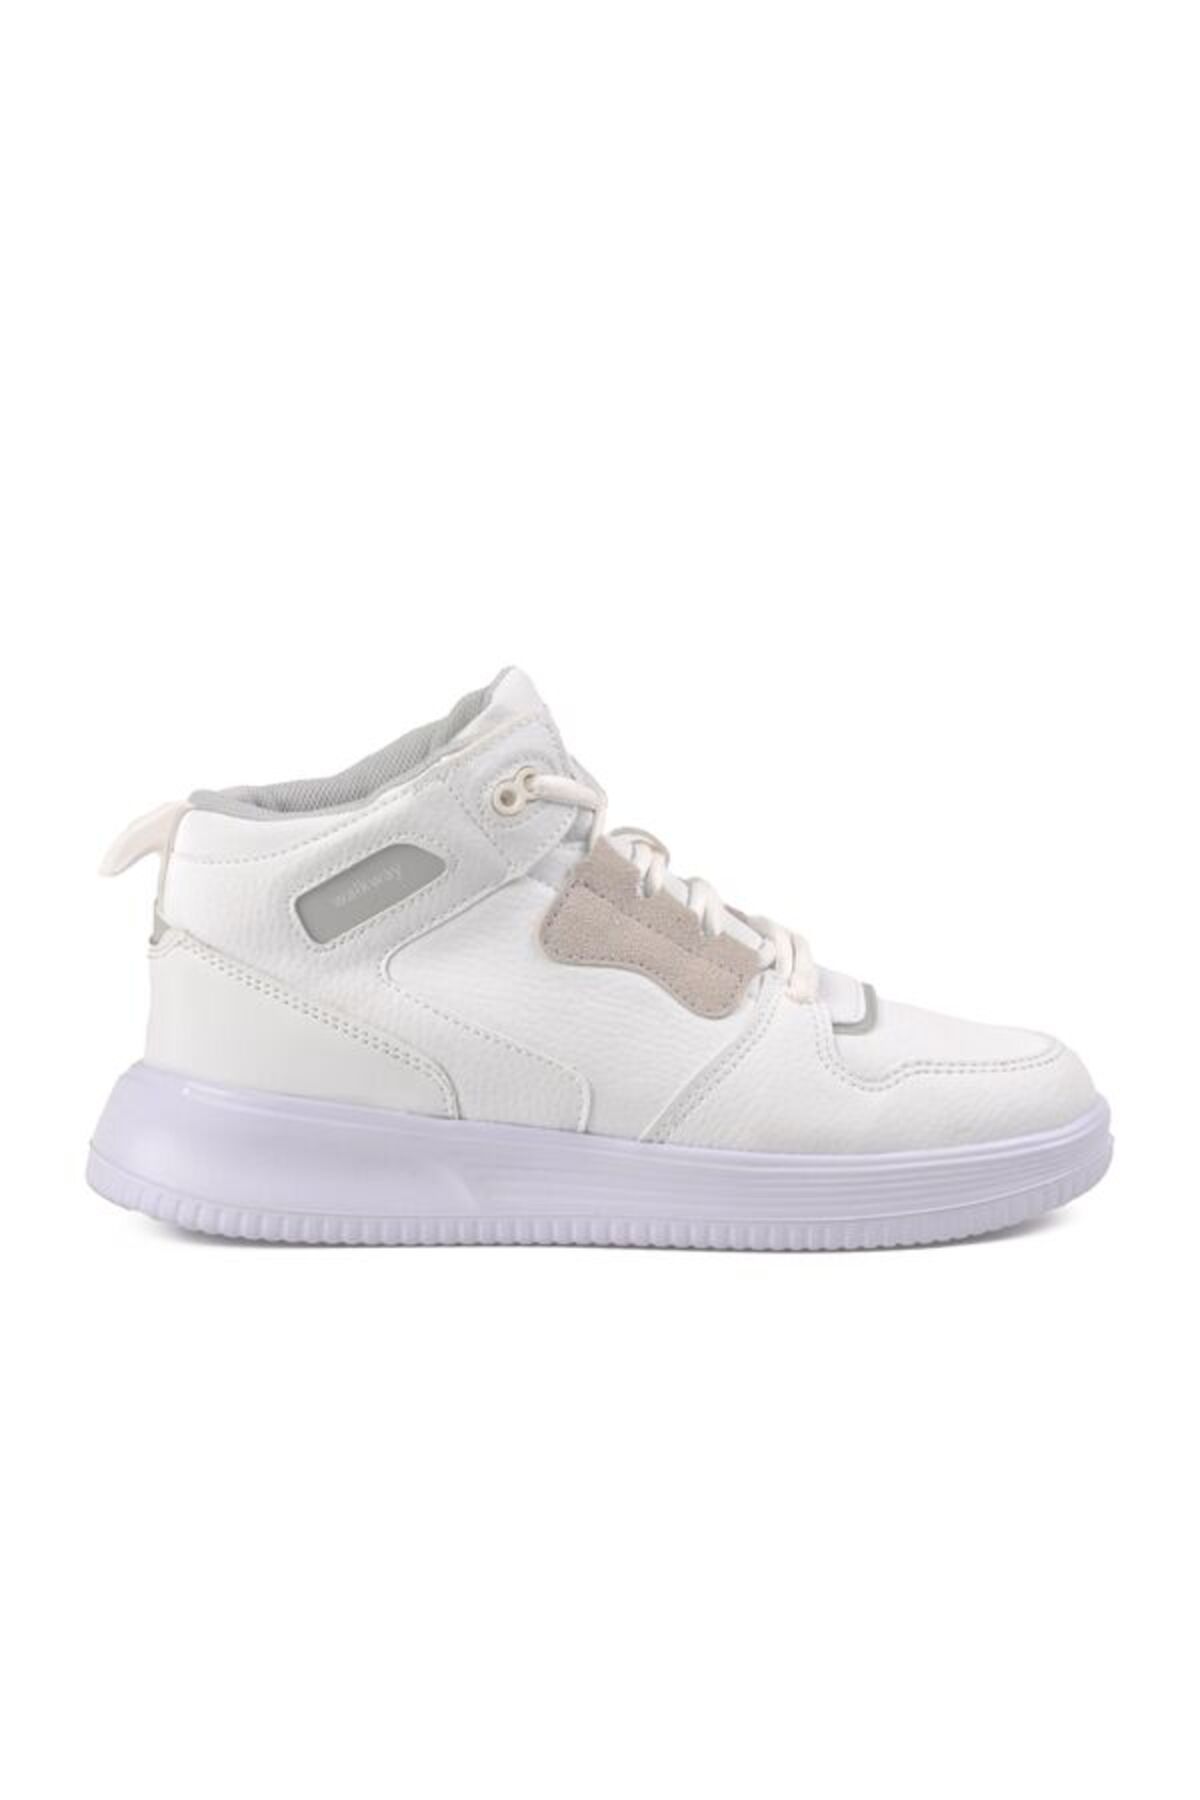 WALKWAY Hill Beyaz-beyaz Unisex Bilek Boy Sneaker